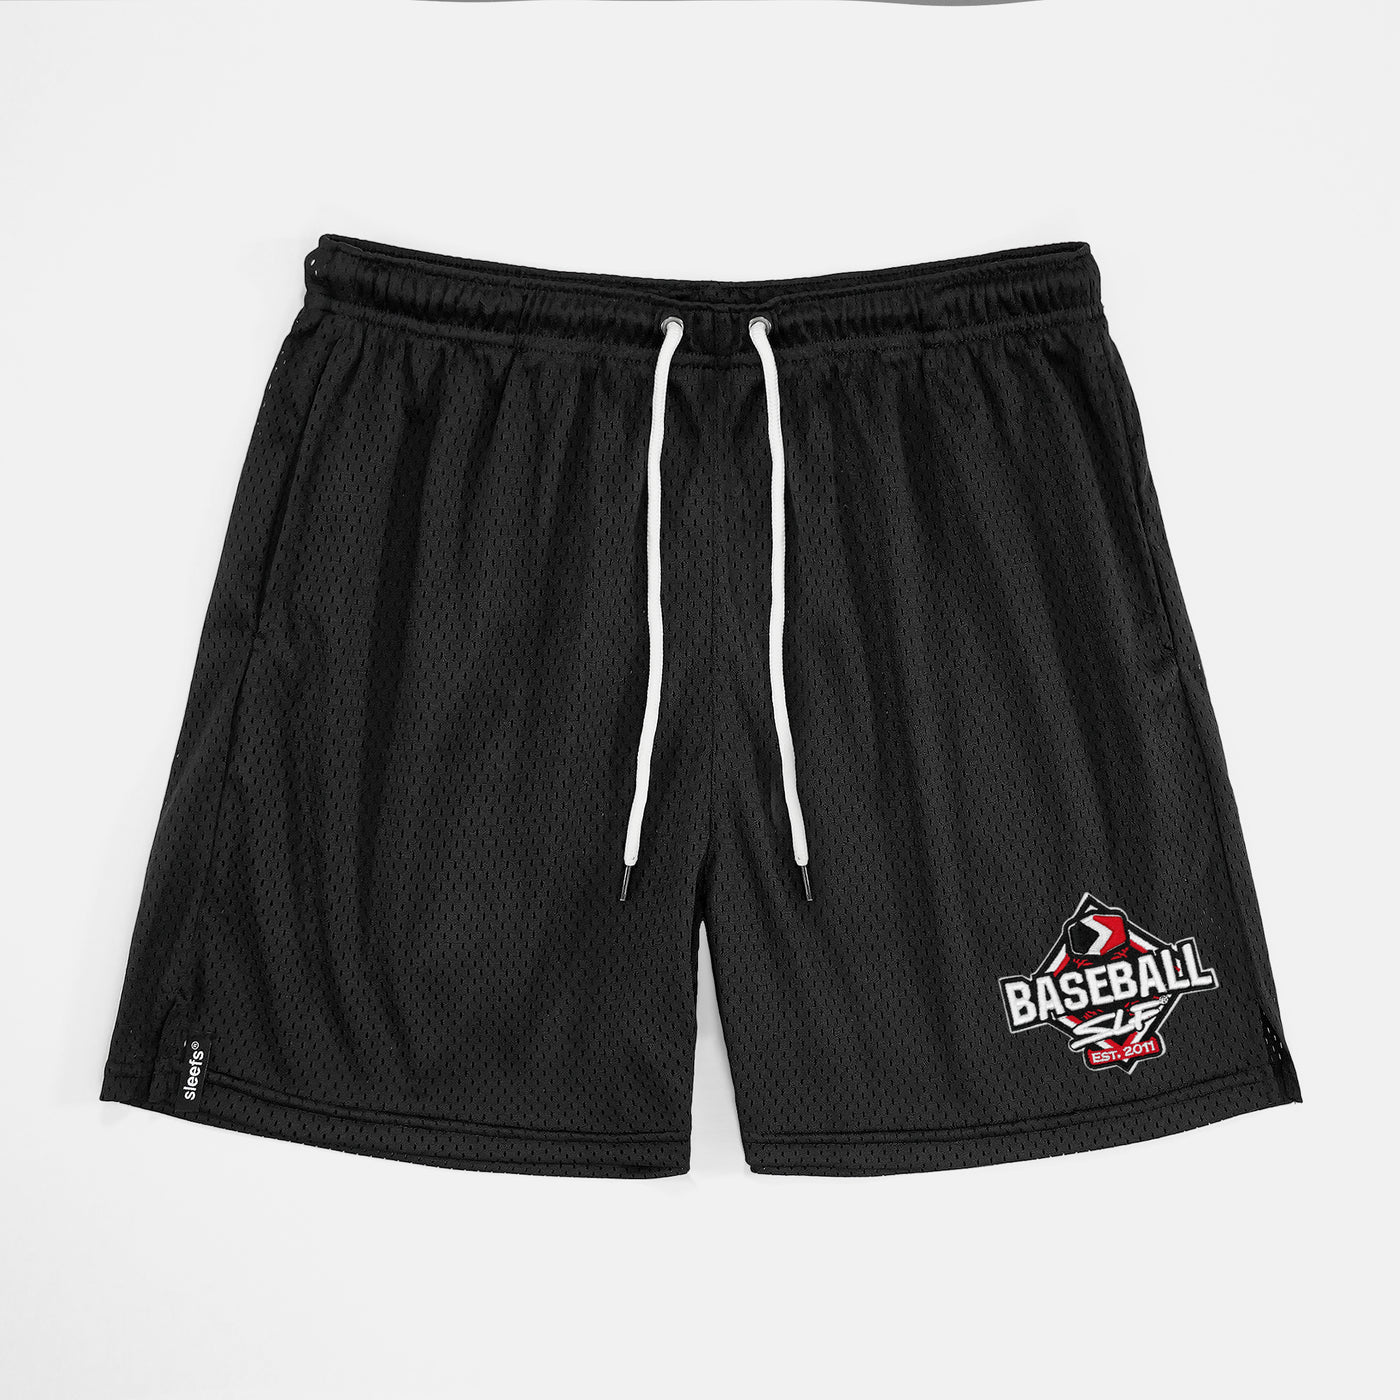 Baseball SLF Patch Shorts - 7"